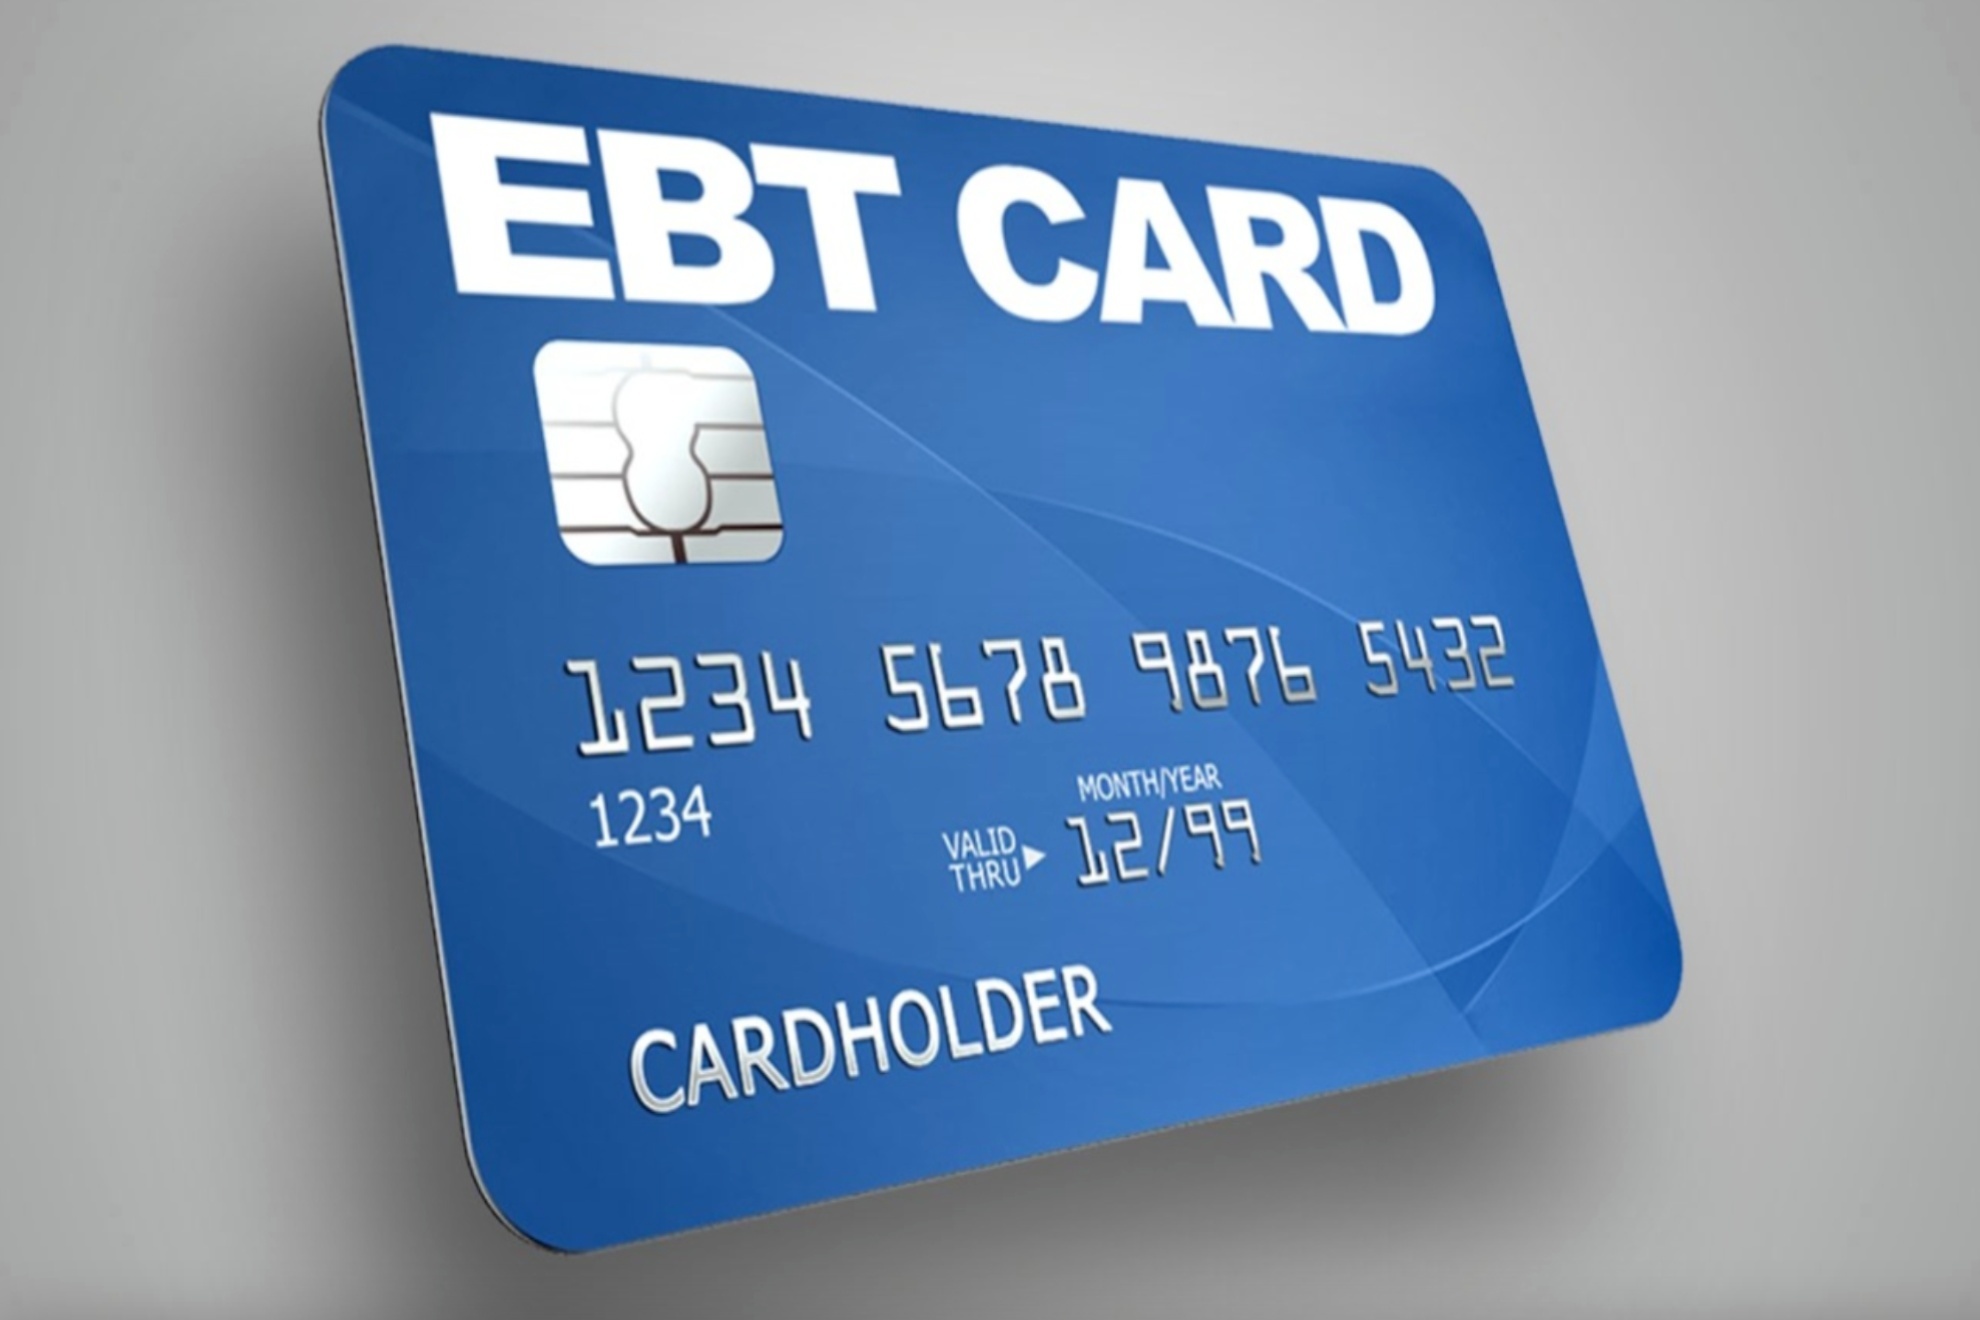 Electronic Benefit Transfer (EBT) card.